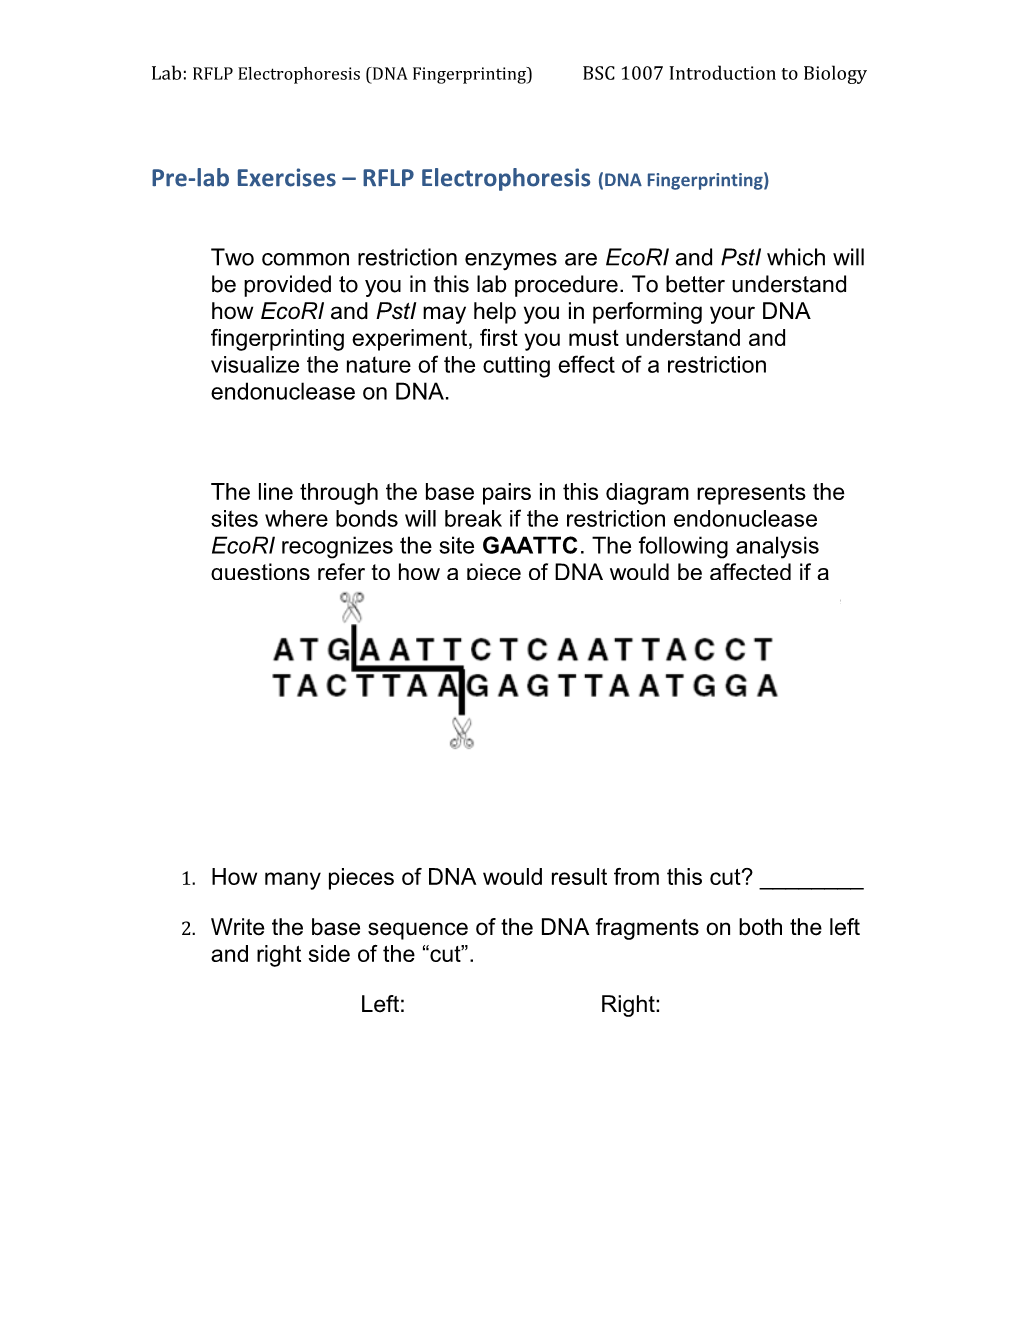 Pre-Lab Exercises RFLP Electrophoresis (DNA Fingerprinting)